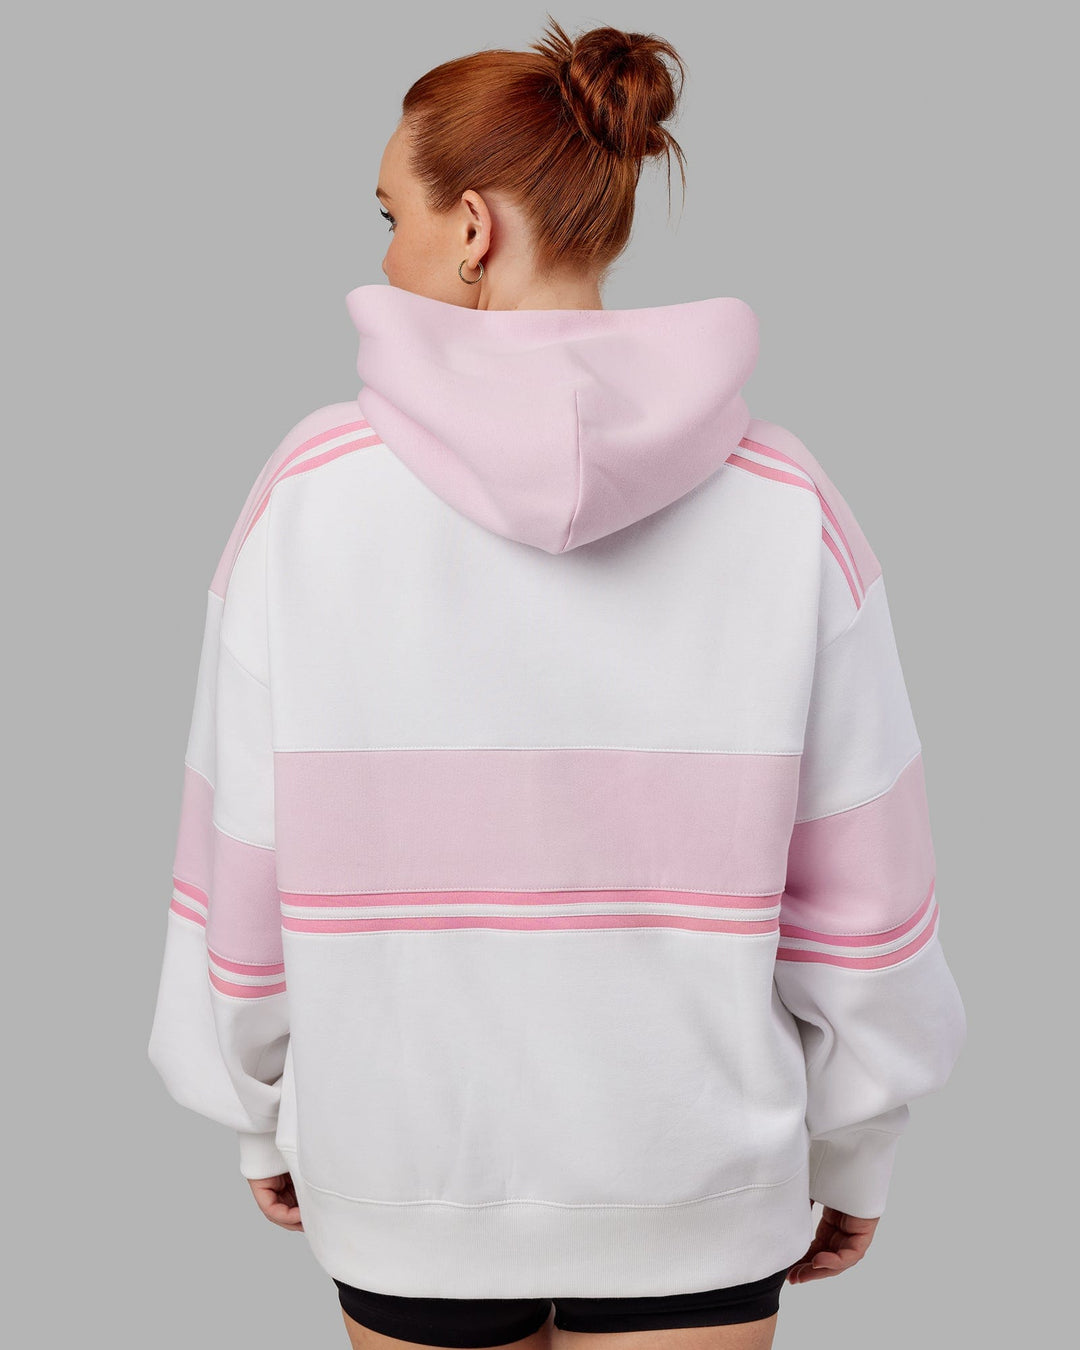 Woman wearing Unisex A-Team Hoodie Oversize - White-Petal Pink